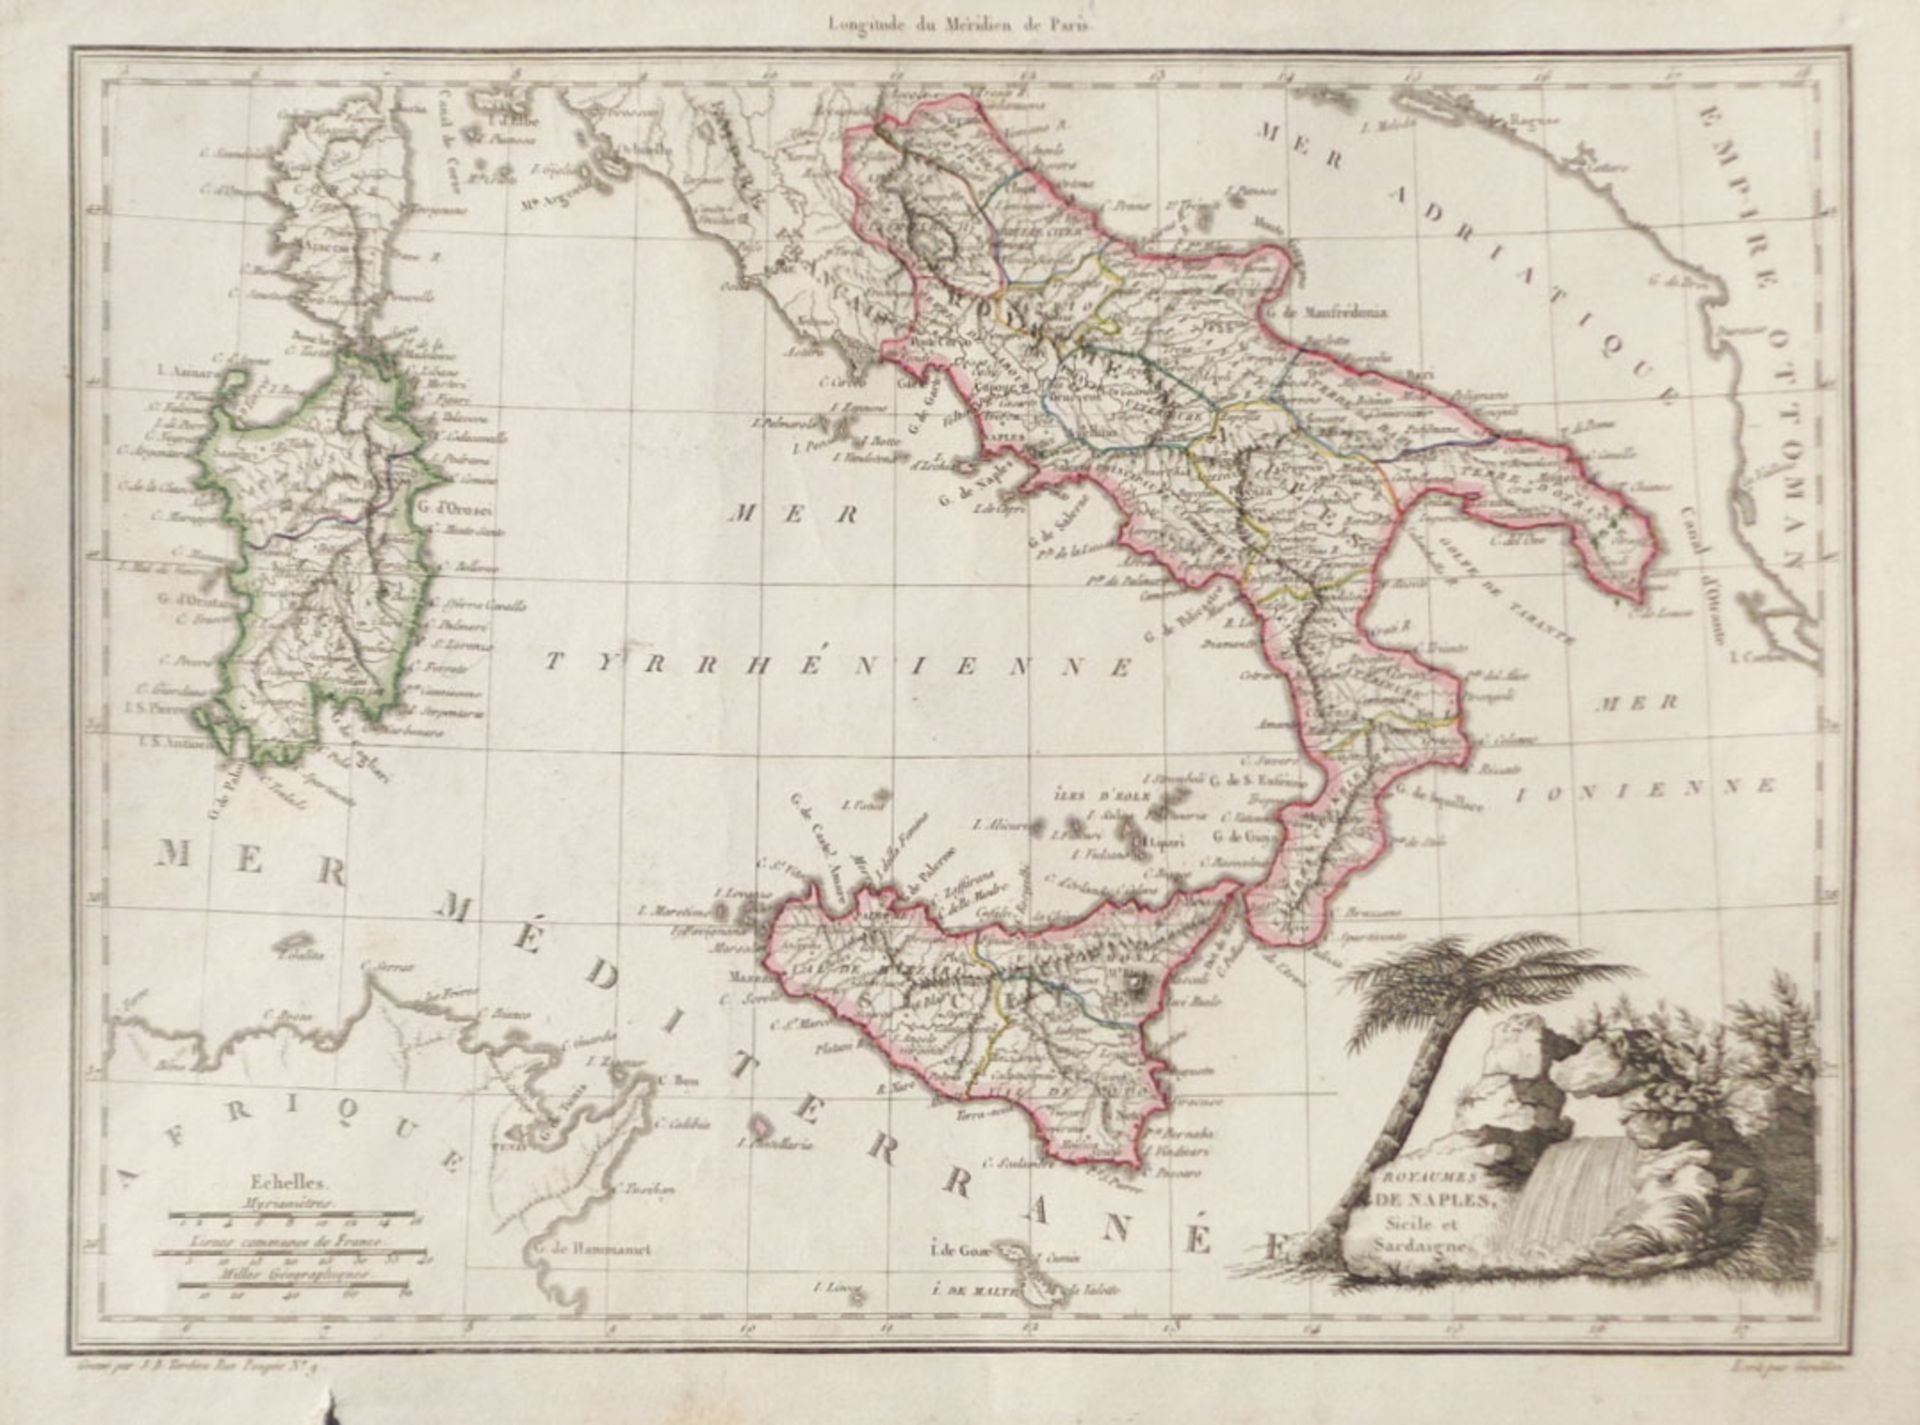 Giraldon - Royaumes de Naples, Sicile et Sardaigne, XVIII sec.